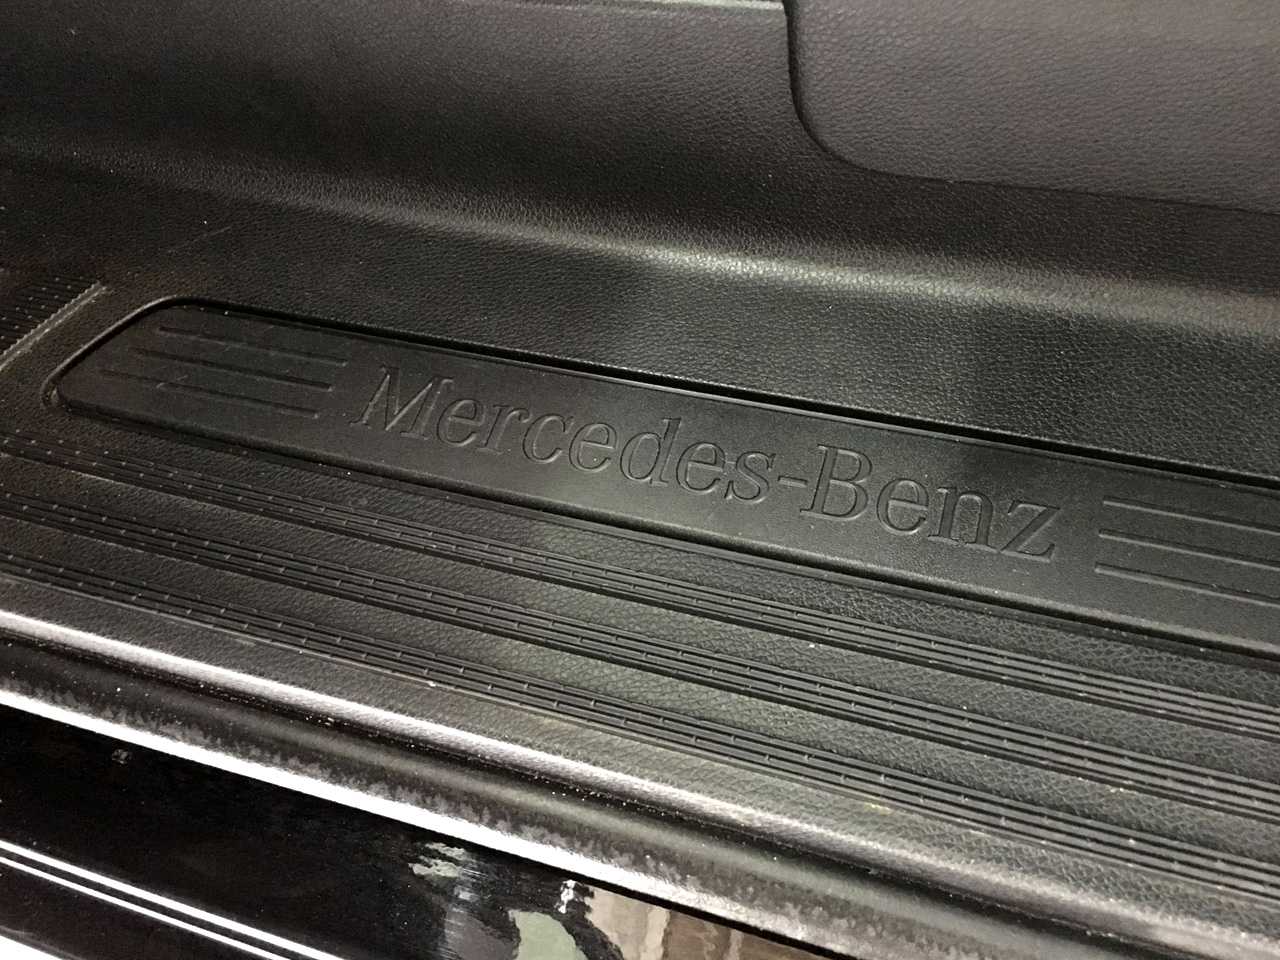 Mercedes Benz footrest